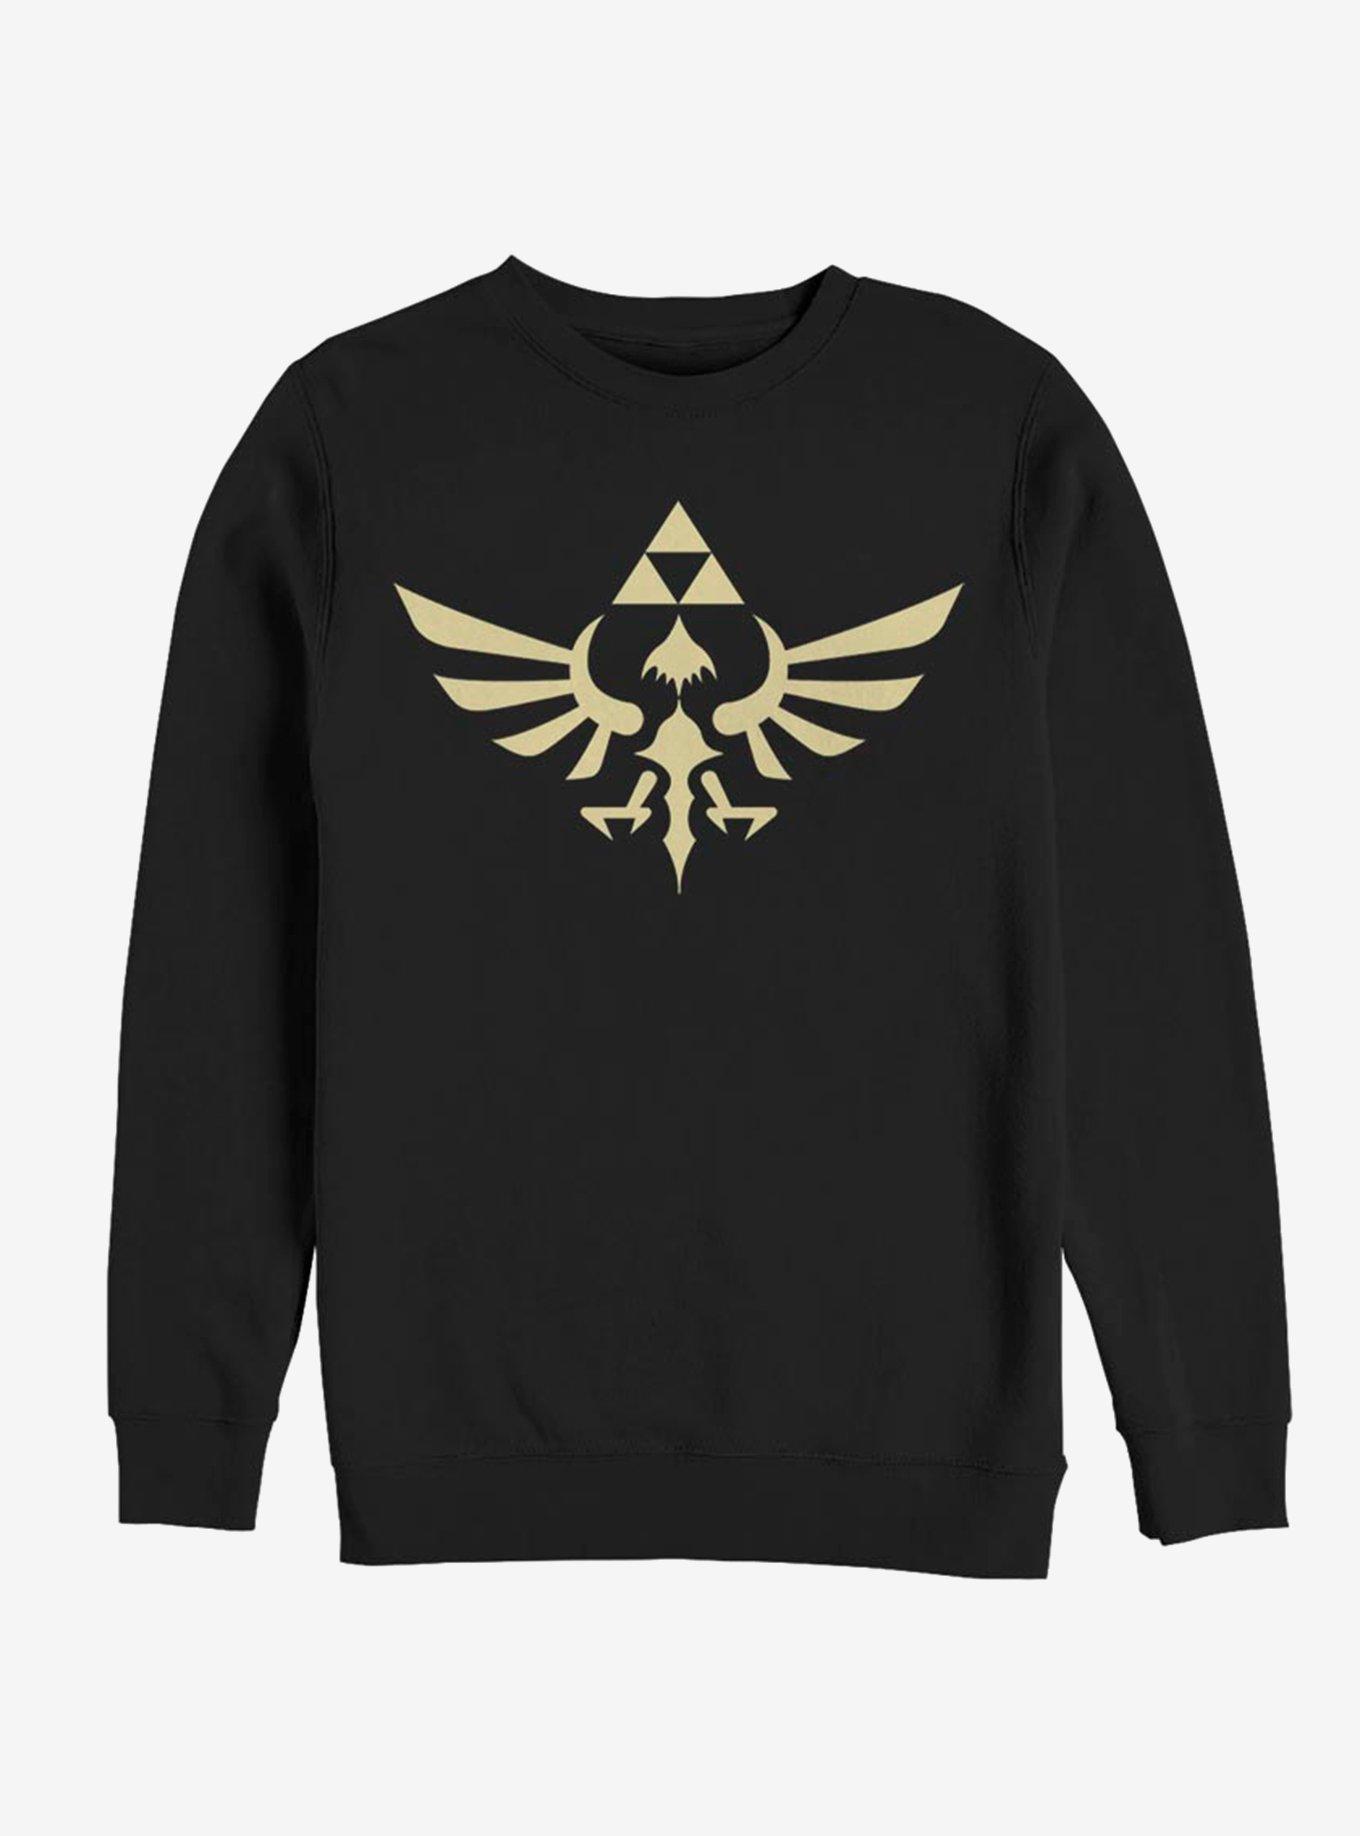 Nintendo Triumphant Triforce Sweatshirt